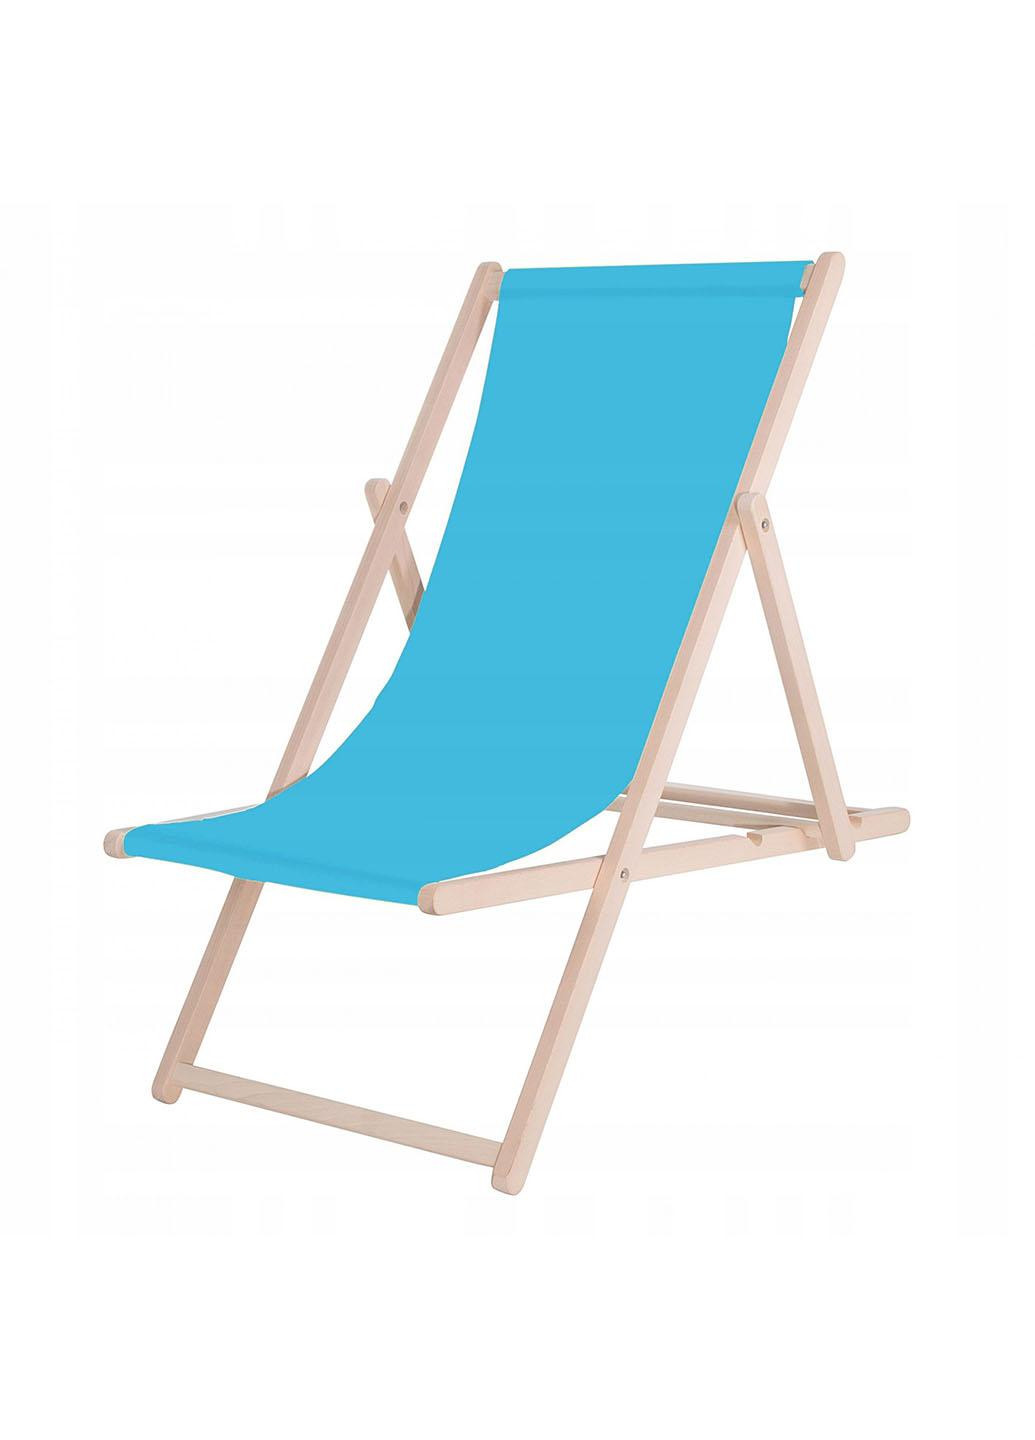 Шезлонг (крісло-лежак) дерев'яний для пляжу, тераси та саду DC0001 BLUE Springos (258354778)